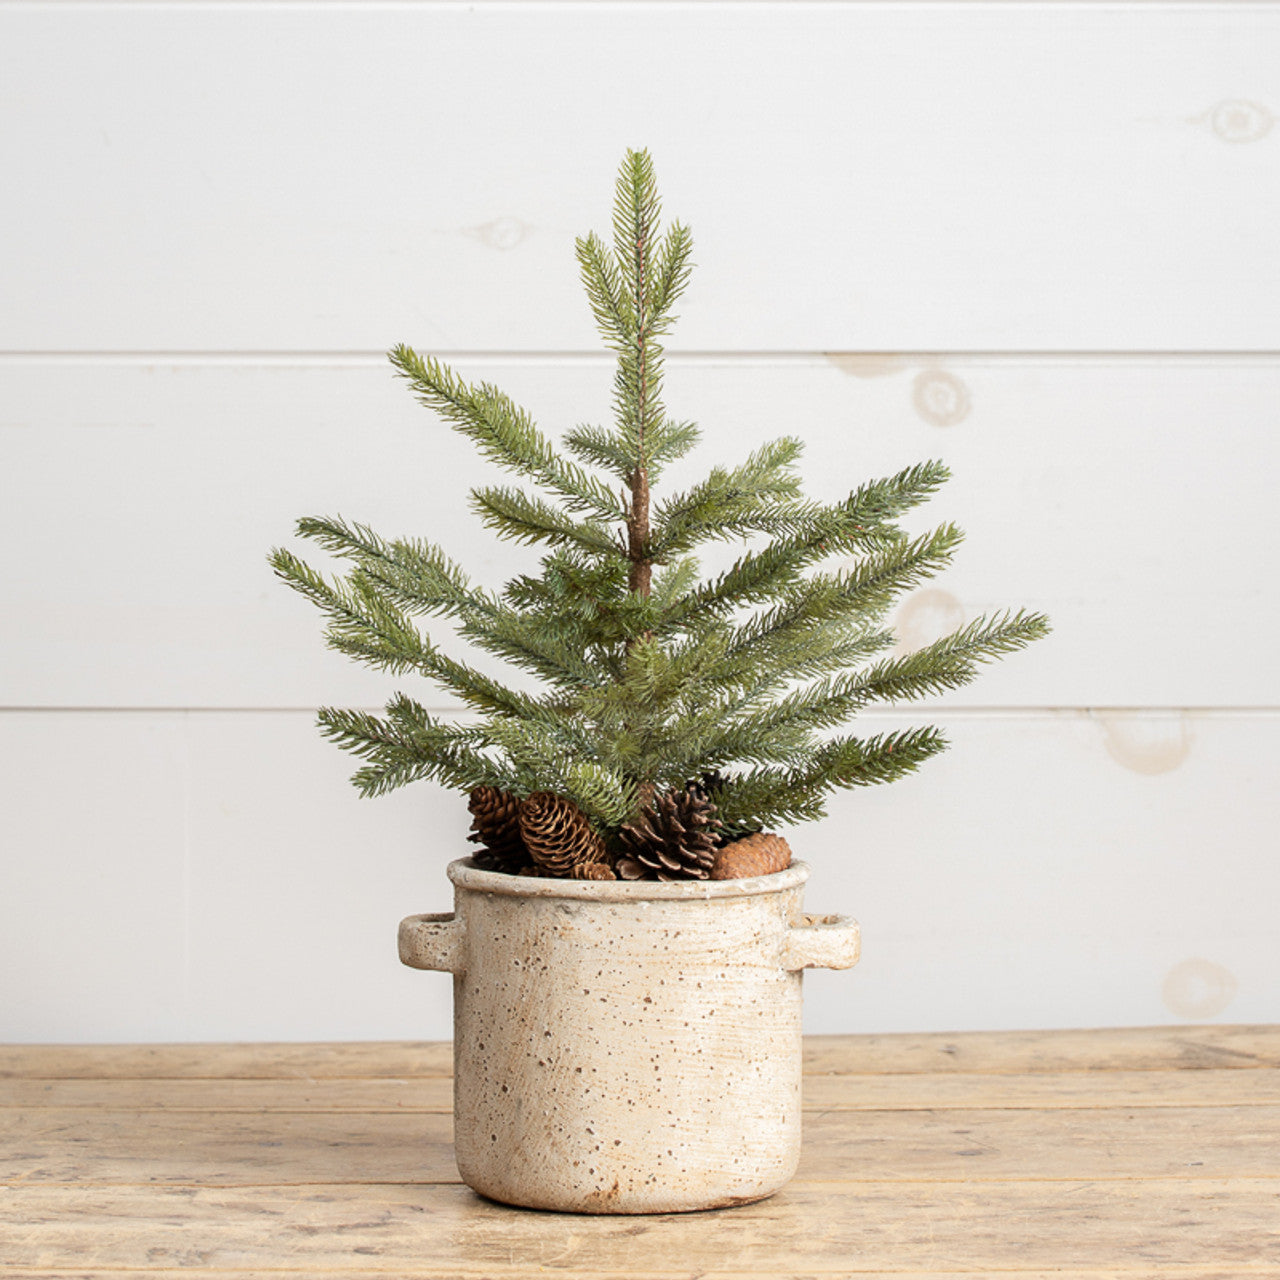 Pine Tree In Ceramic Pot With Pinecones